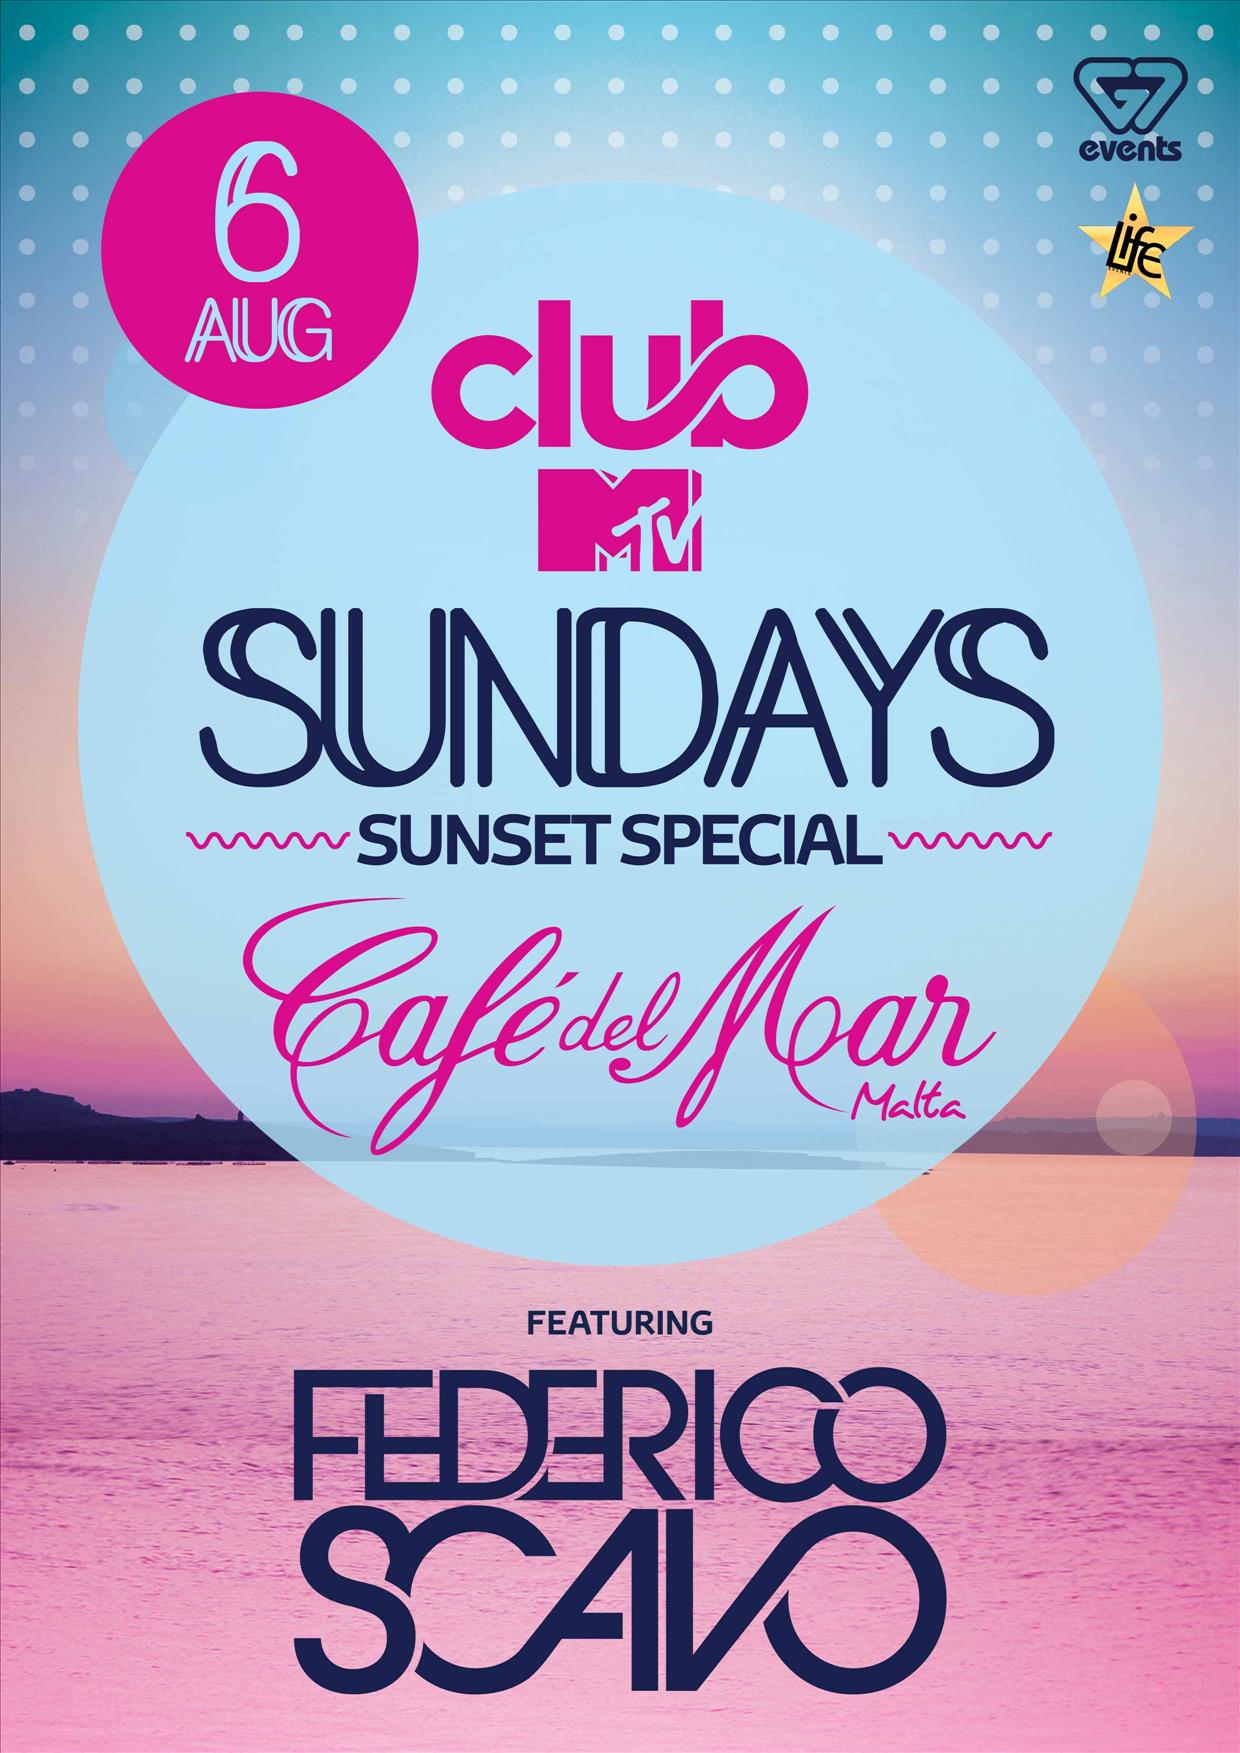 Club MTV Sundays present FEDERICO SCAVO poster